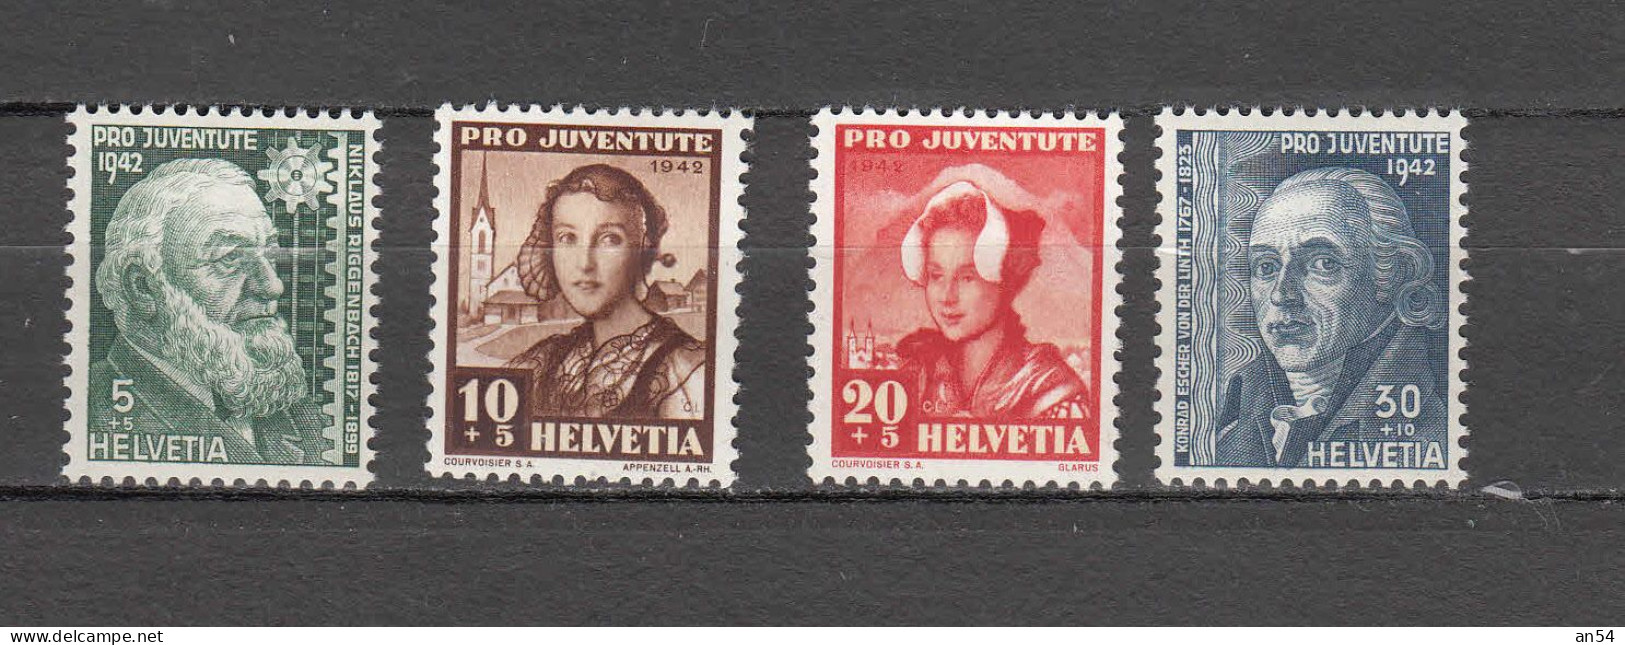 PJ   1942    N° J101 à J104    NEUFS**            CATALOGUE SBK - Unused Stamps